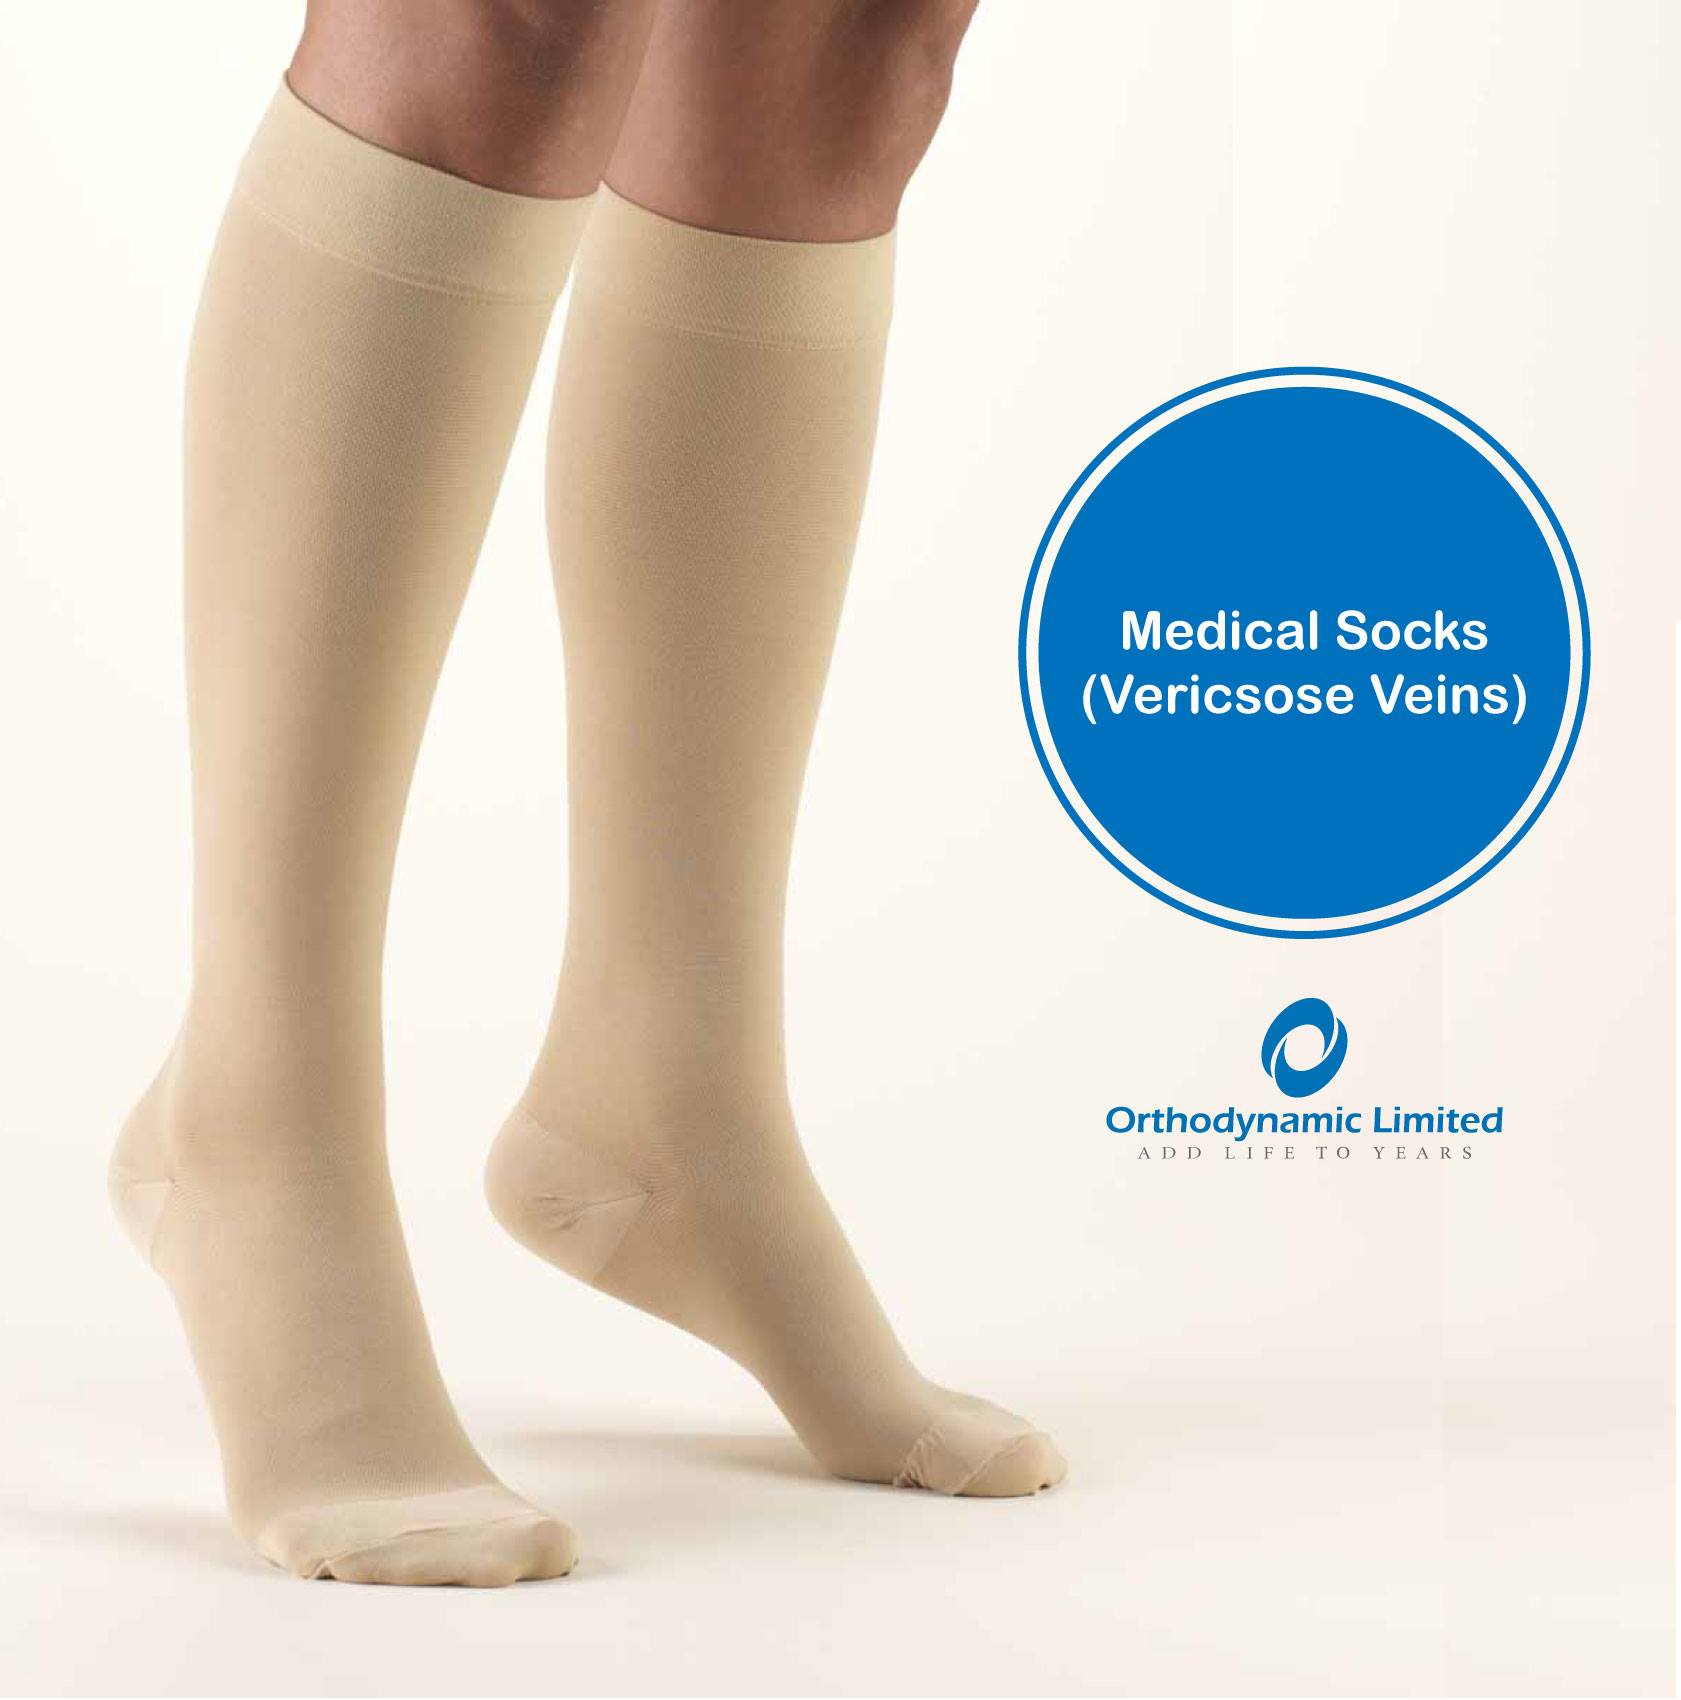 Varicose Vein Stockings Ad Class 1 - Below knee